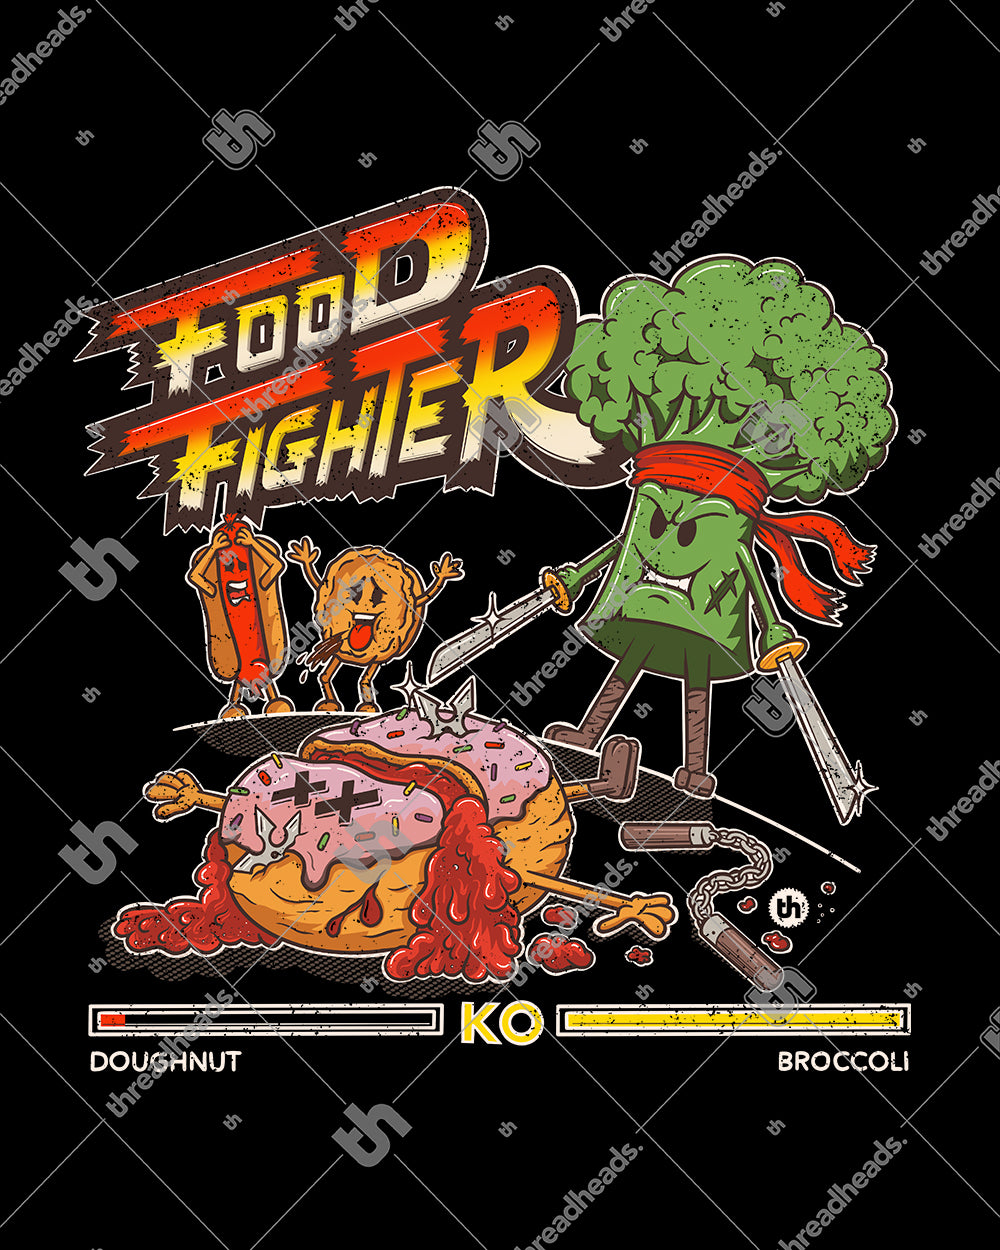 Food Fighter T-Shirt Australia Online #colour_black